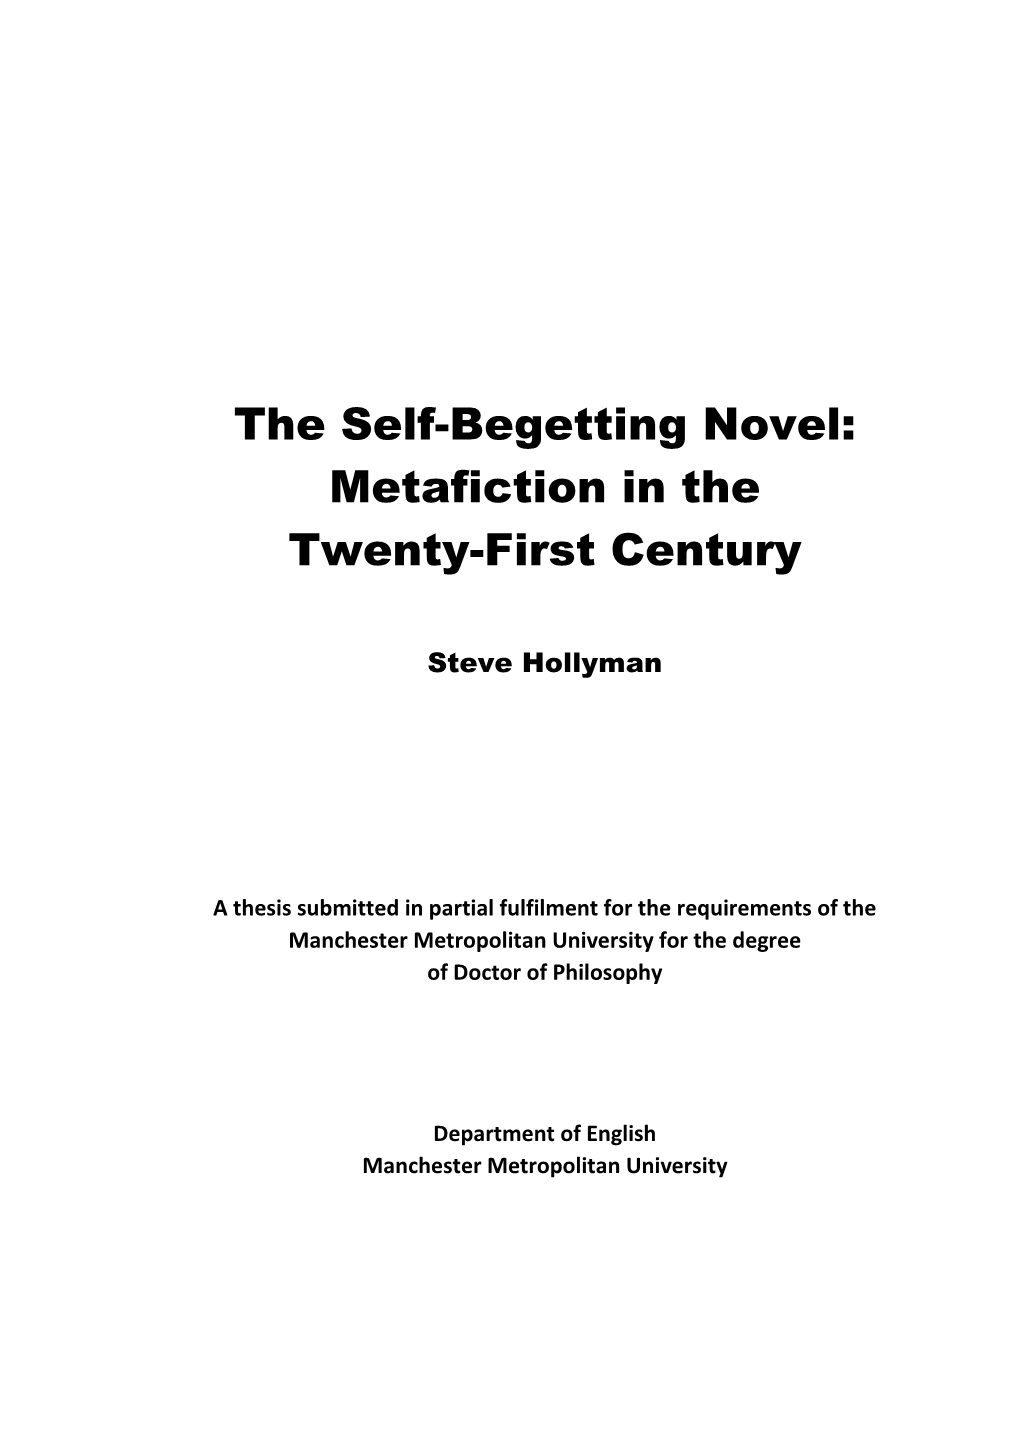 The Self-Begetting Novel: Metafiction in the Twenty-First Century